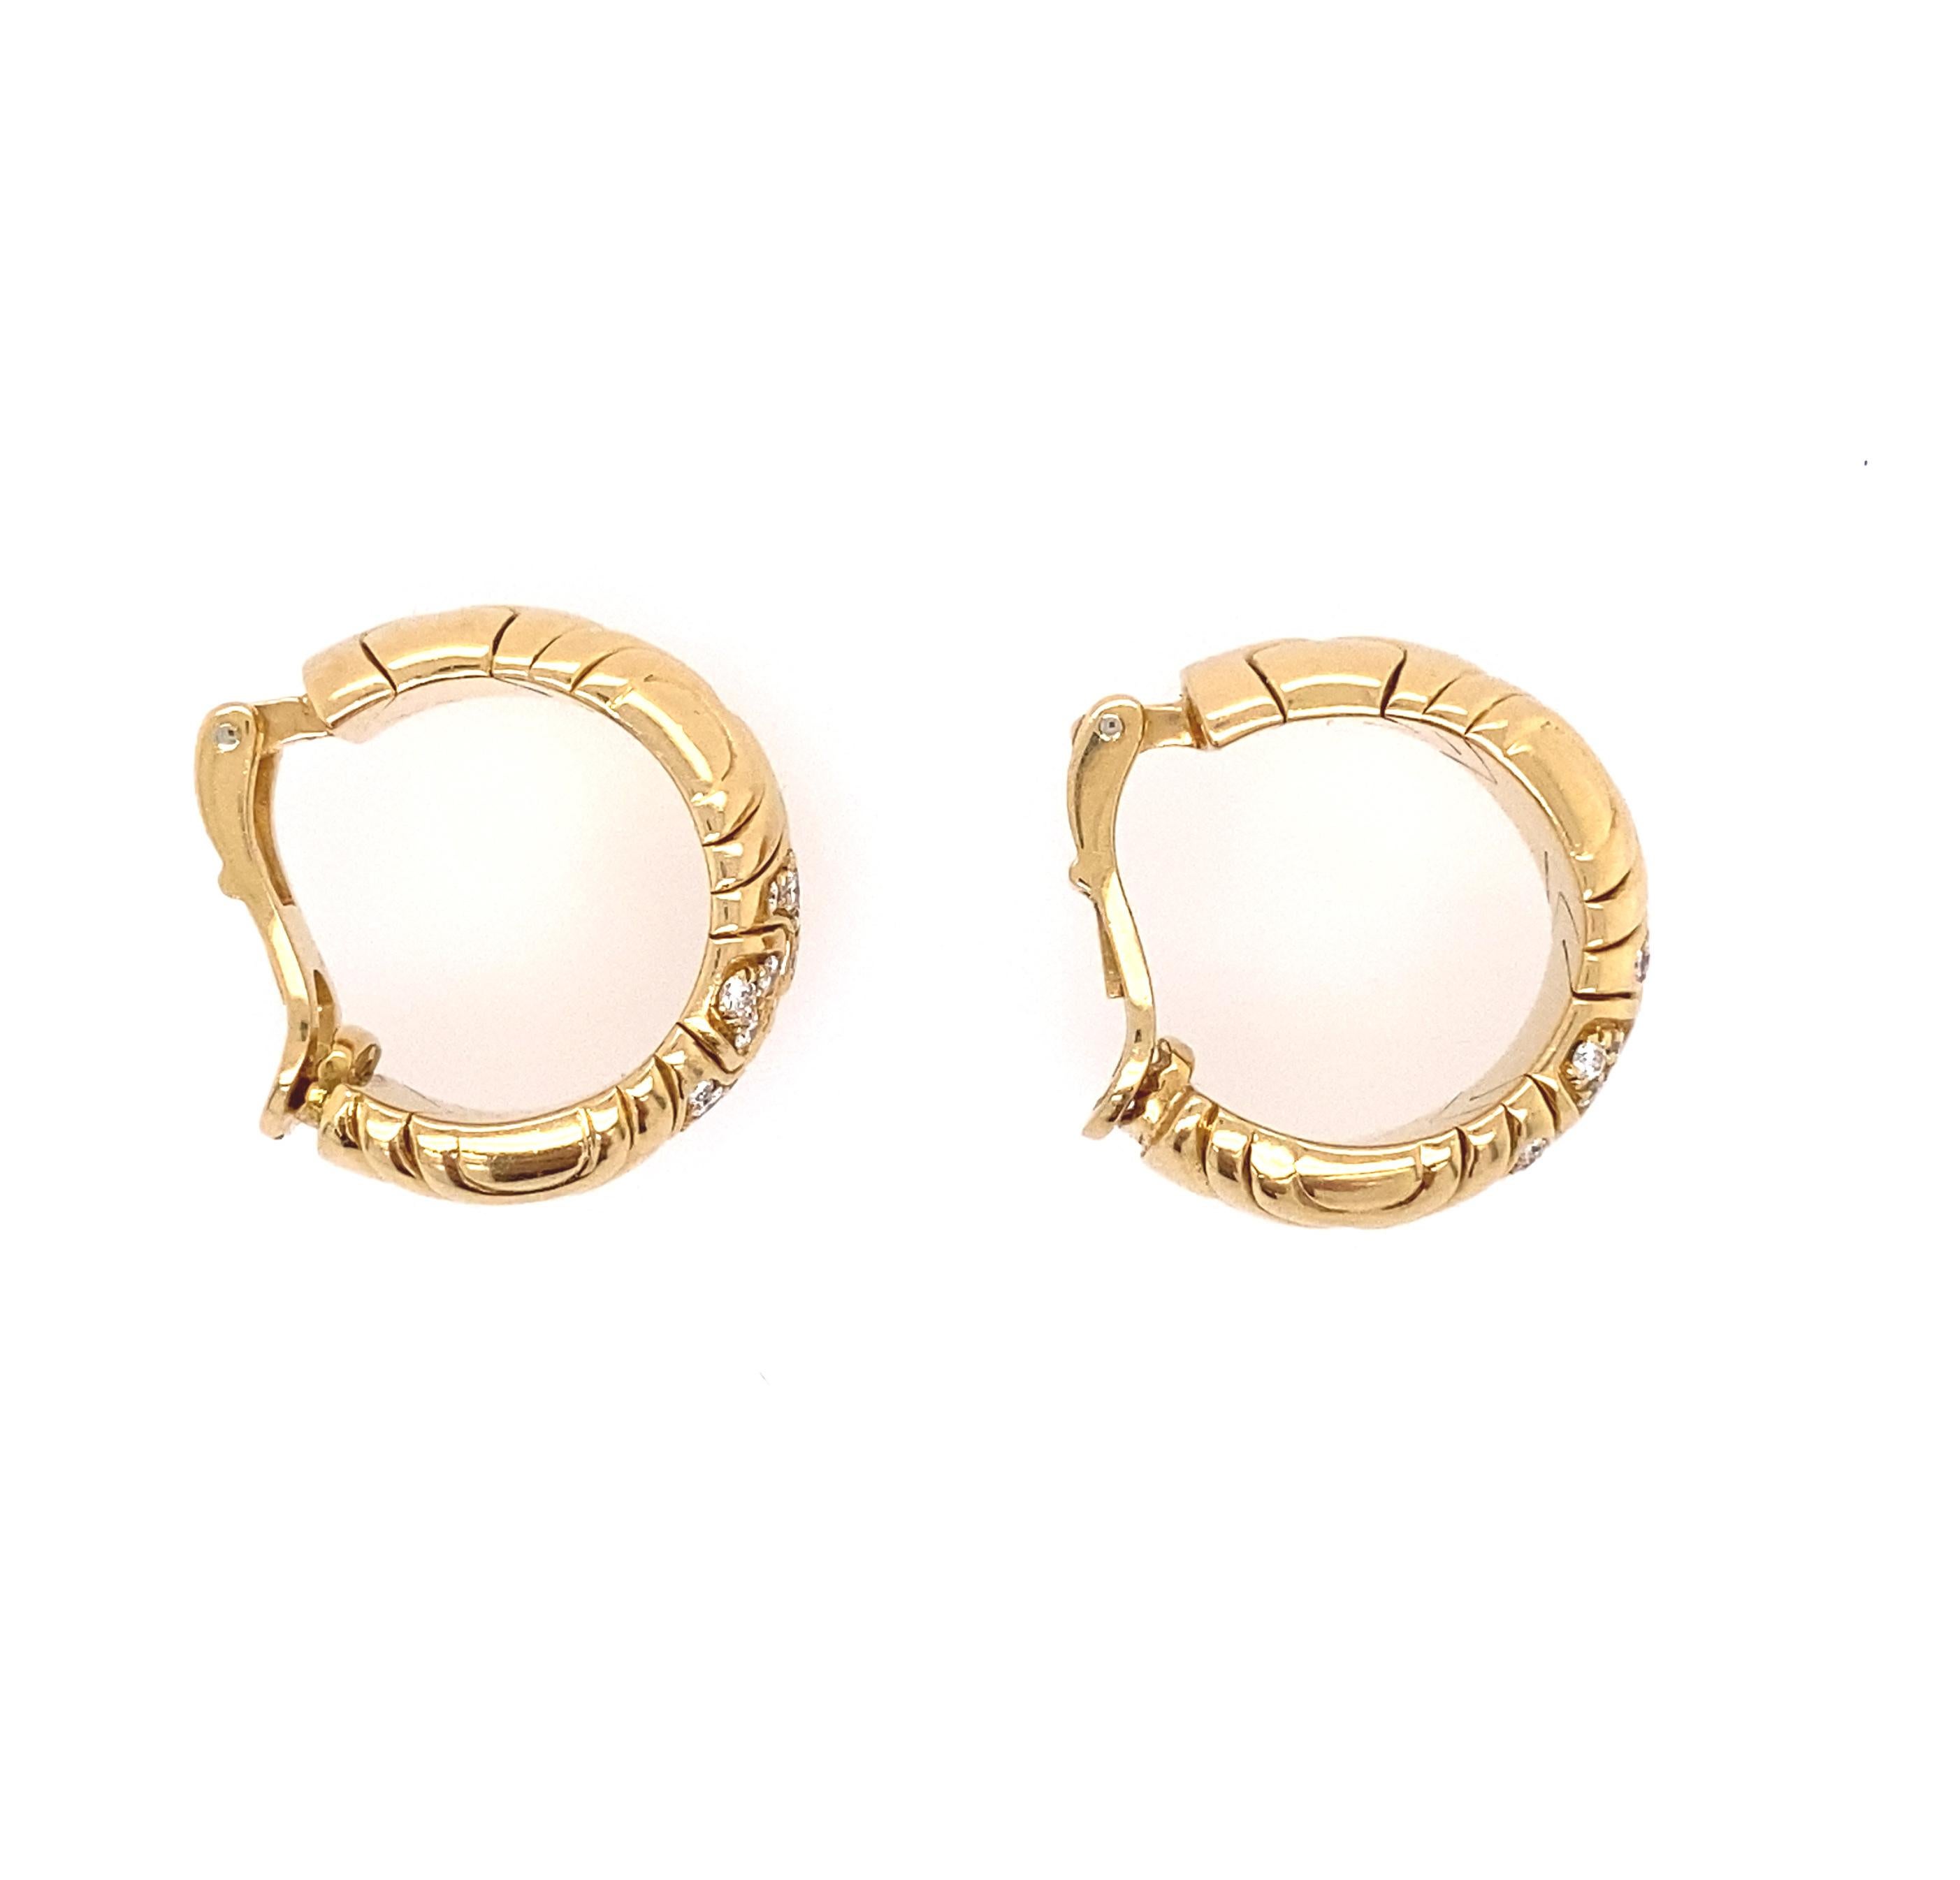 Contemporary Bvlgari 18k Gold Diamond Earrings